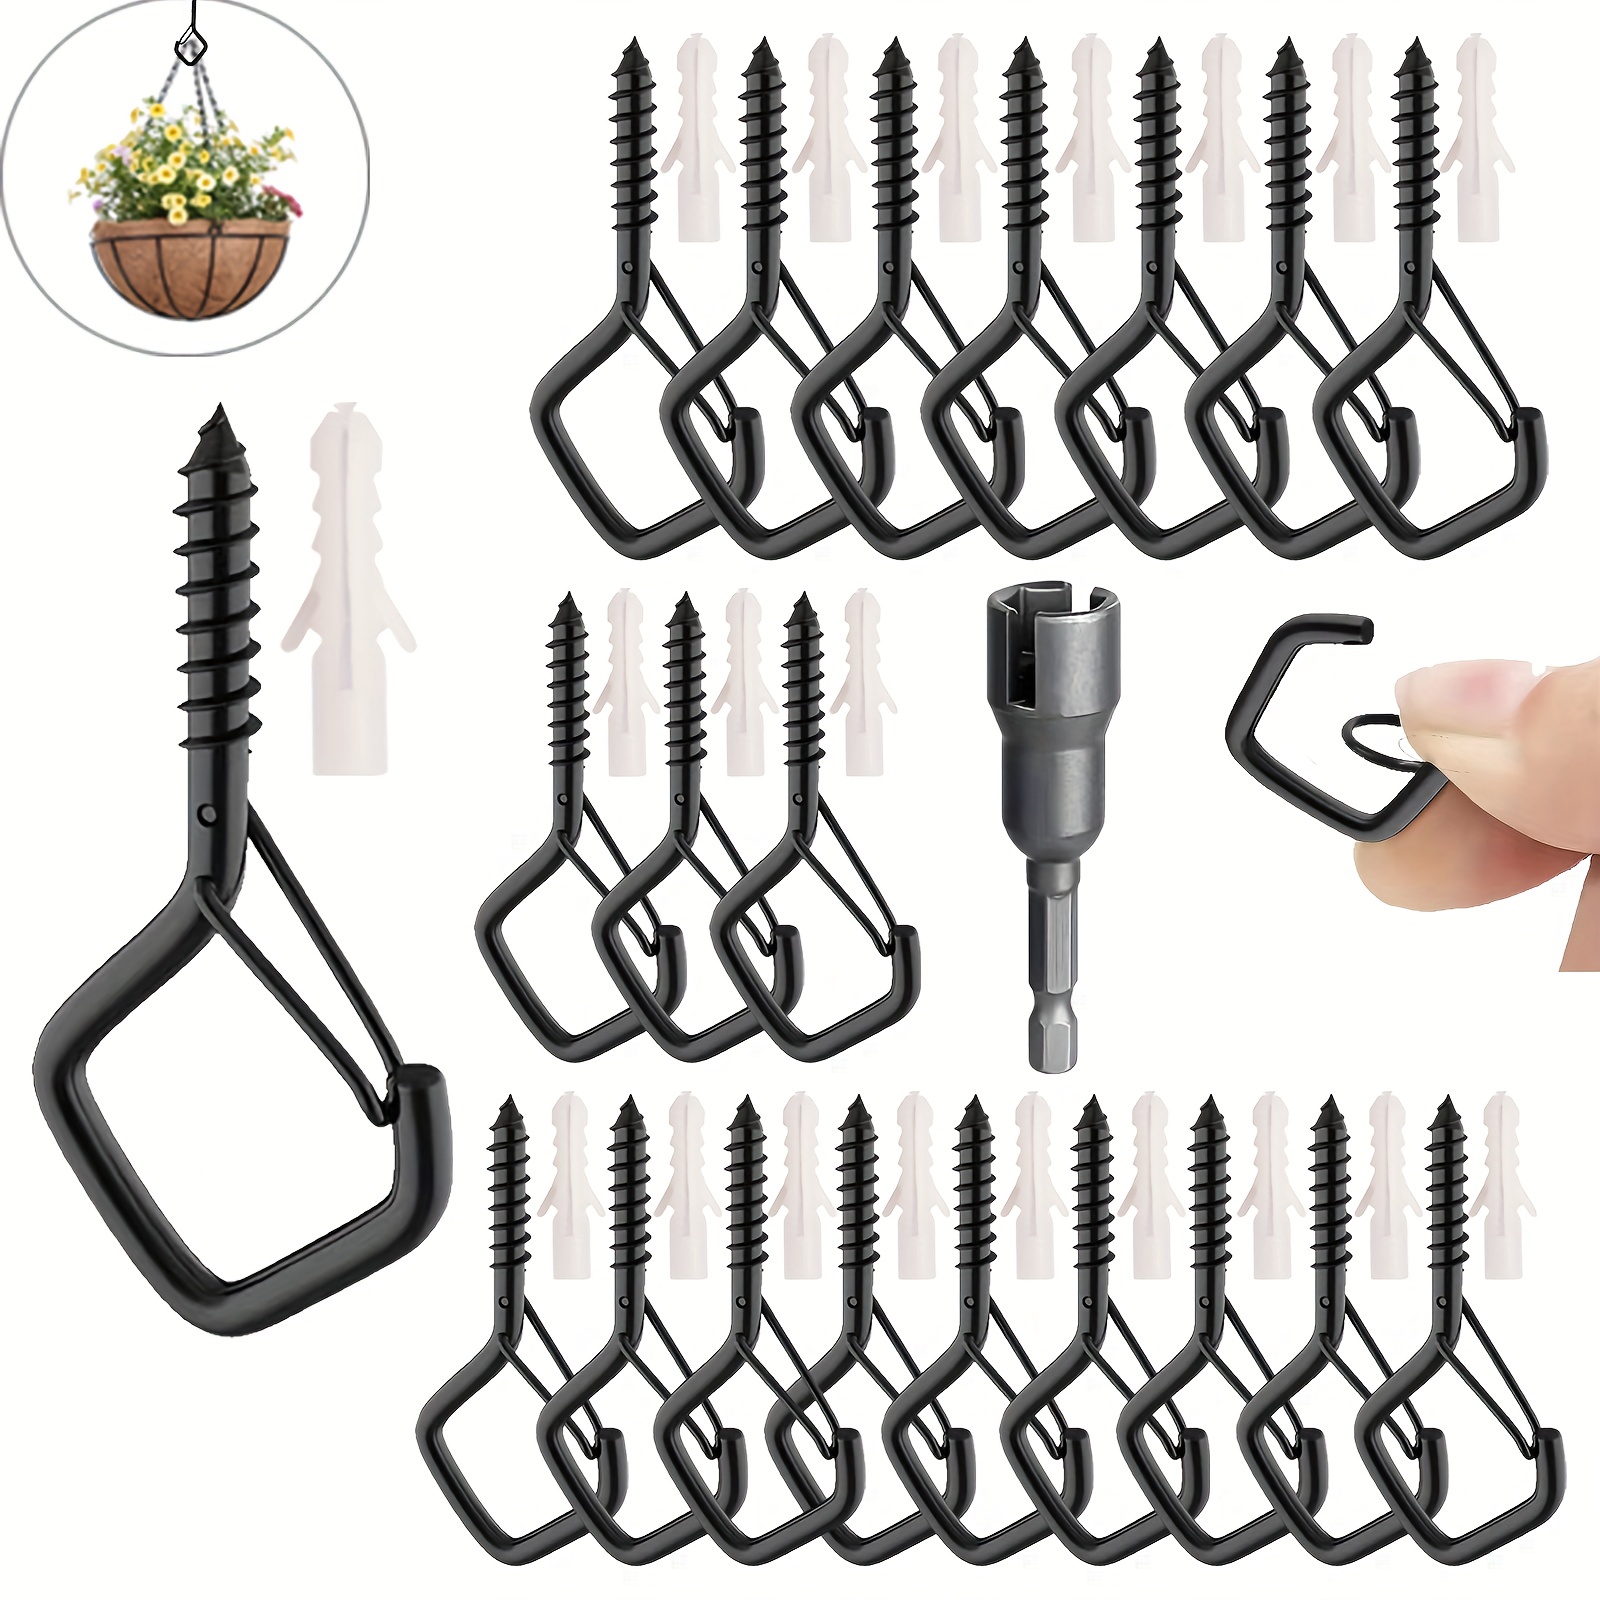 100 Pcs small screw hooks Hooks for Hanging Plants Heavy Duty Vinyl Coated  Screw